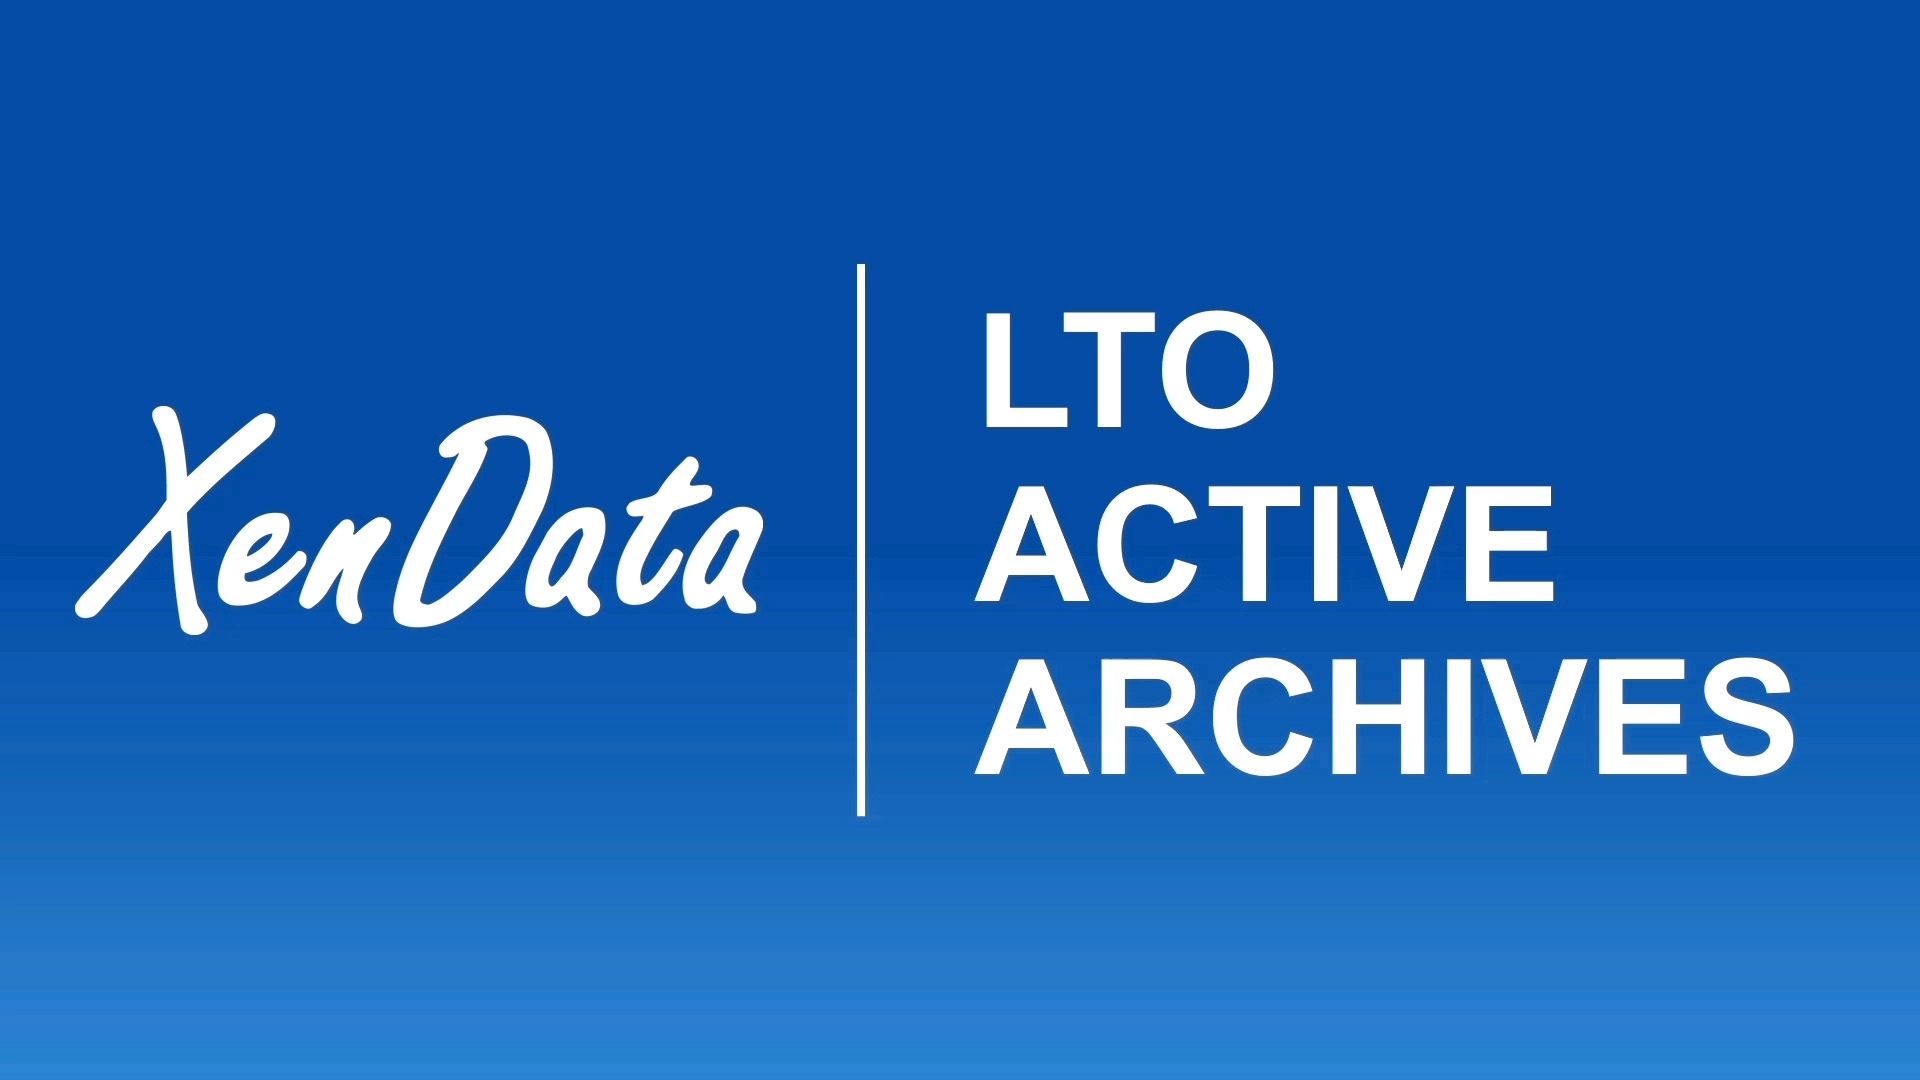 XenData LTO Active Archives